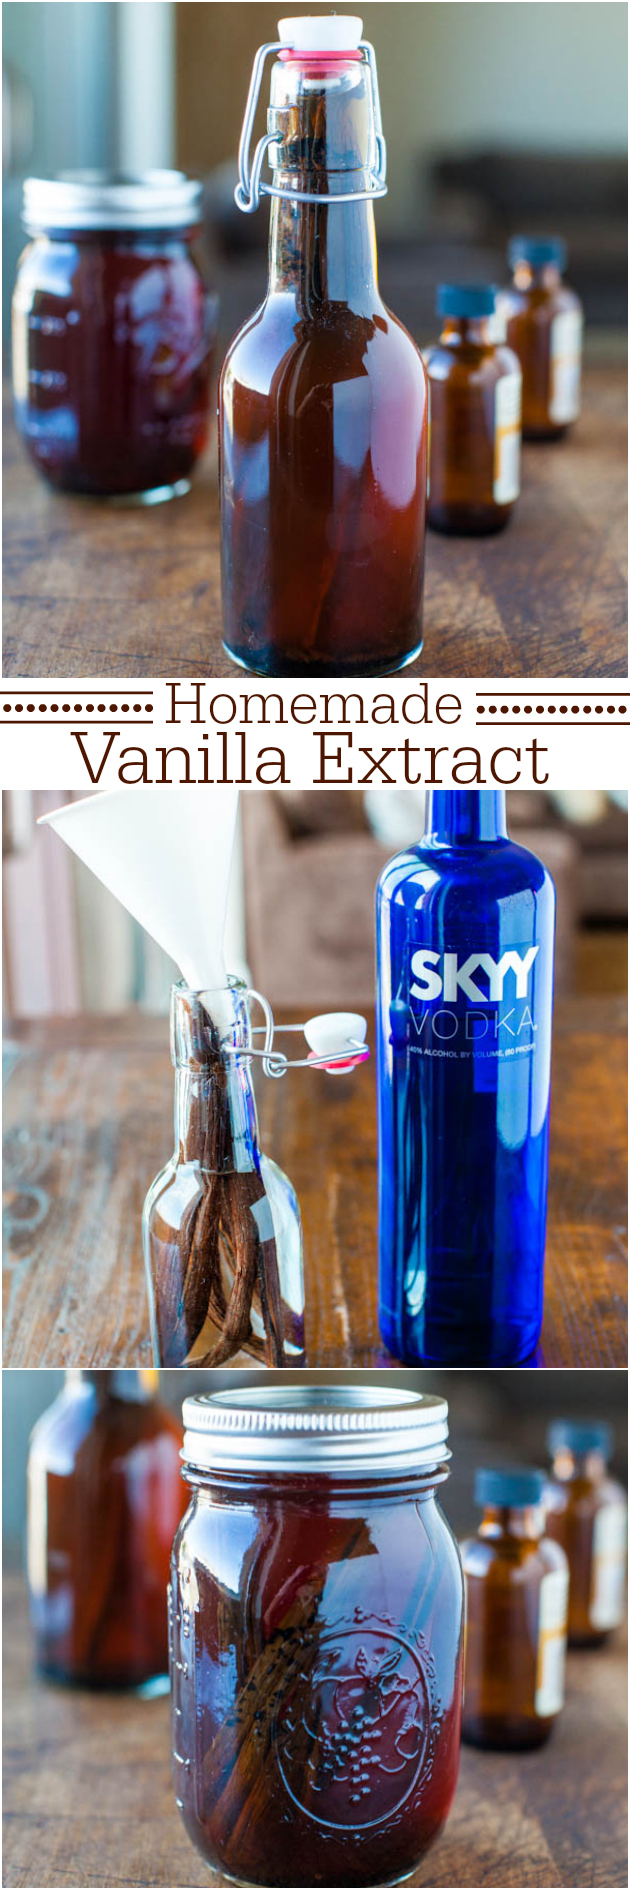 Homemade Vanilla Extract bottles and jars